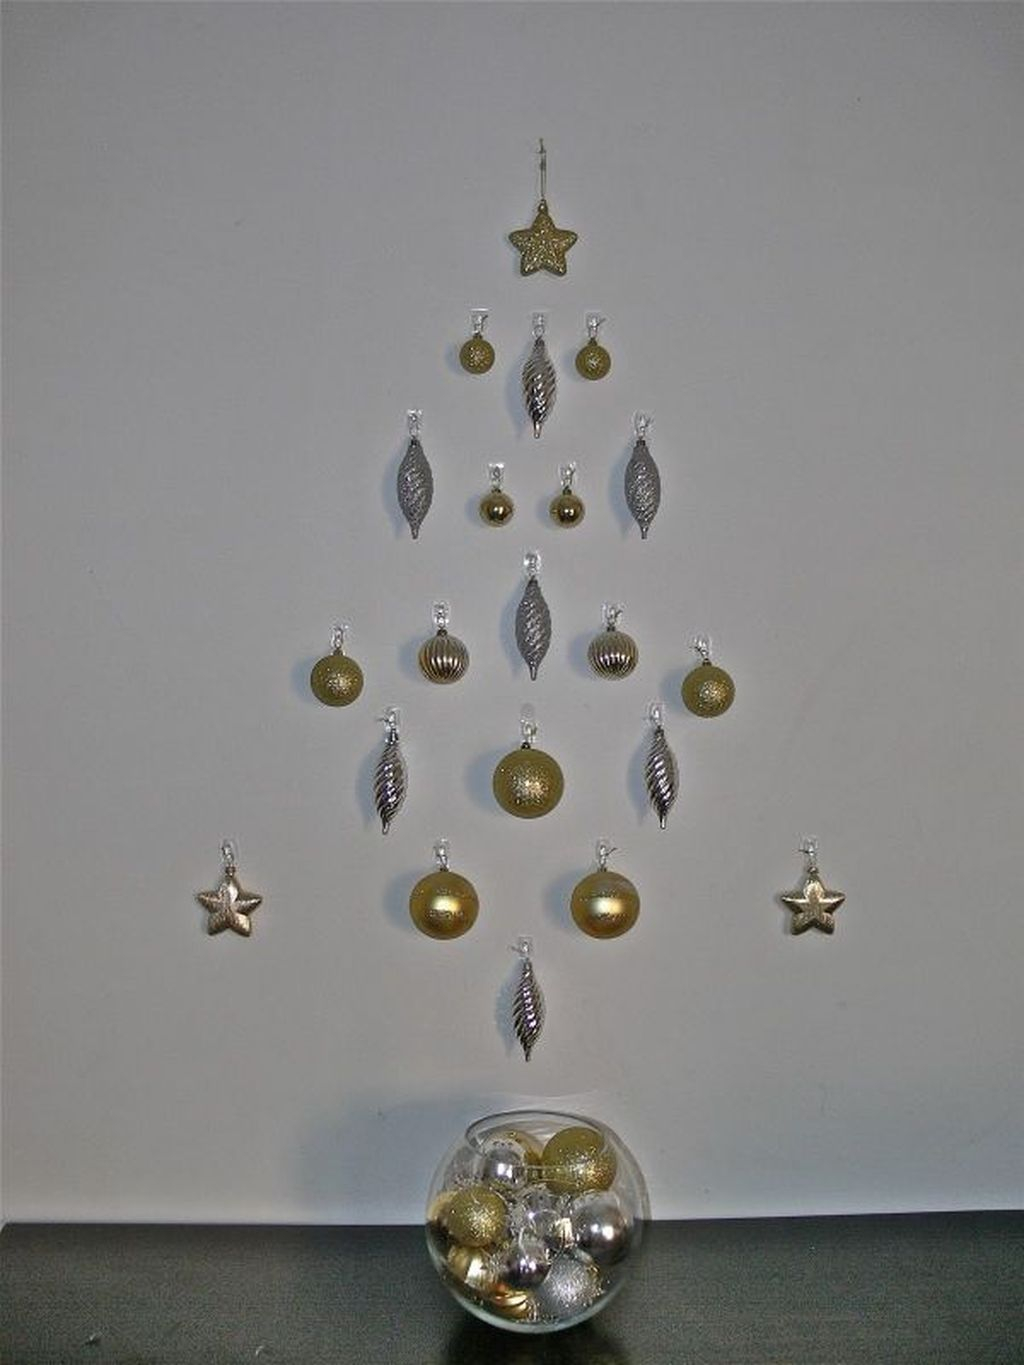 Diy Wall Christmas Tree Ideas05